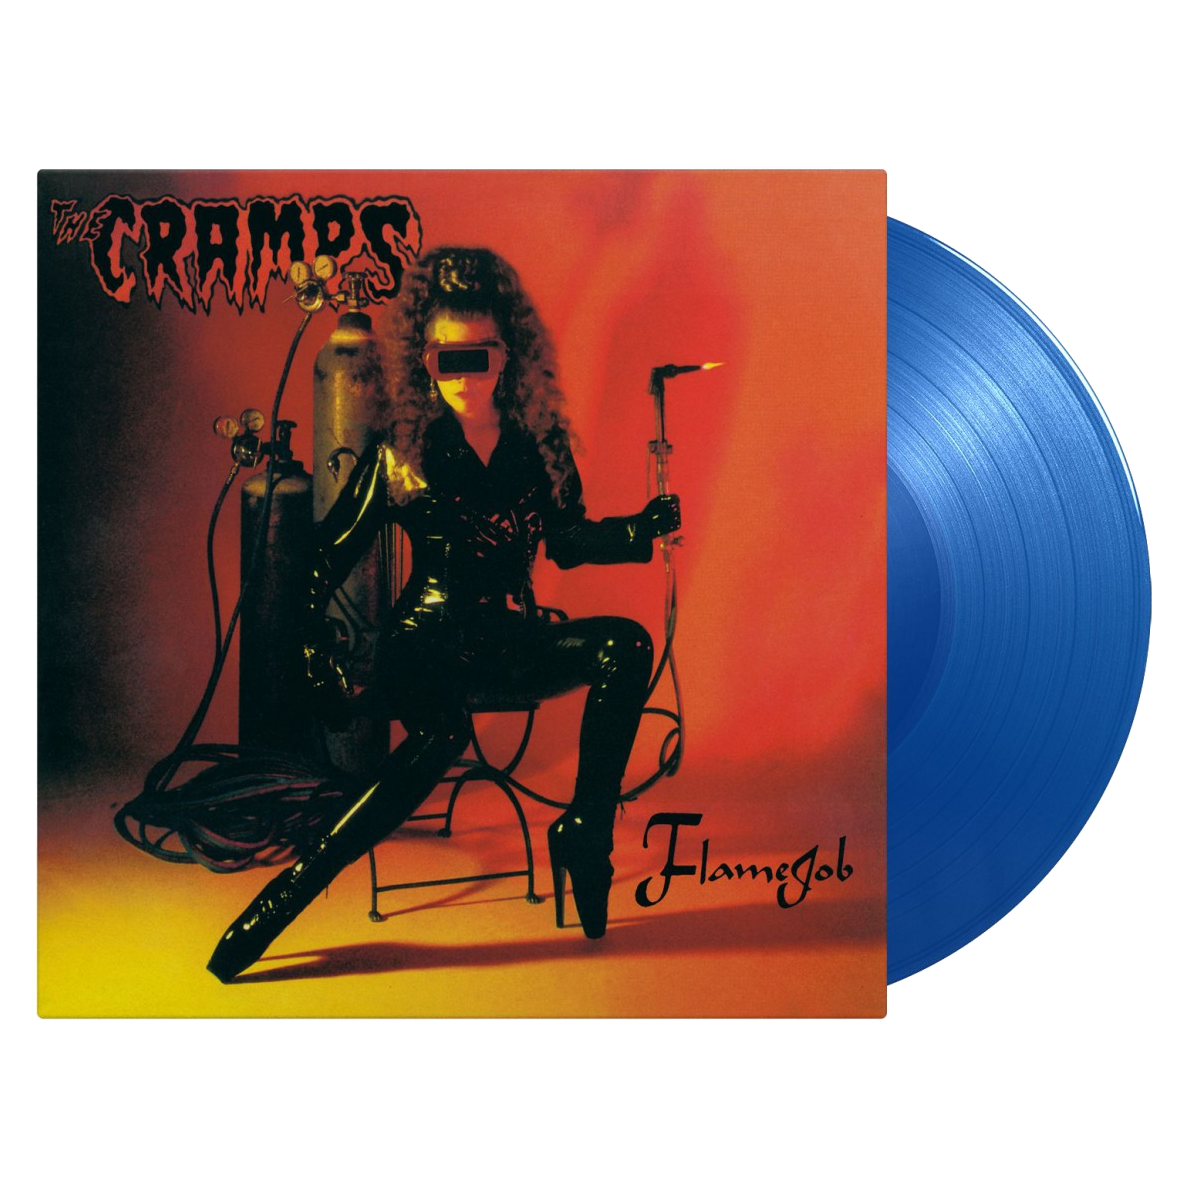 The Cramps - Flamejob: Translucent Blue Vinyl LP